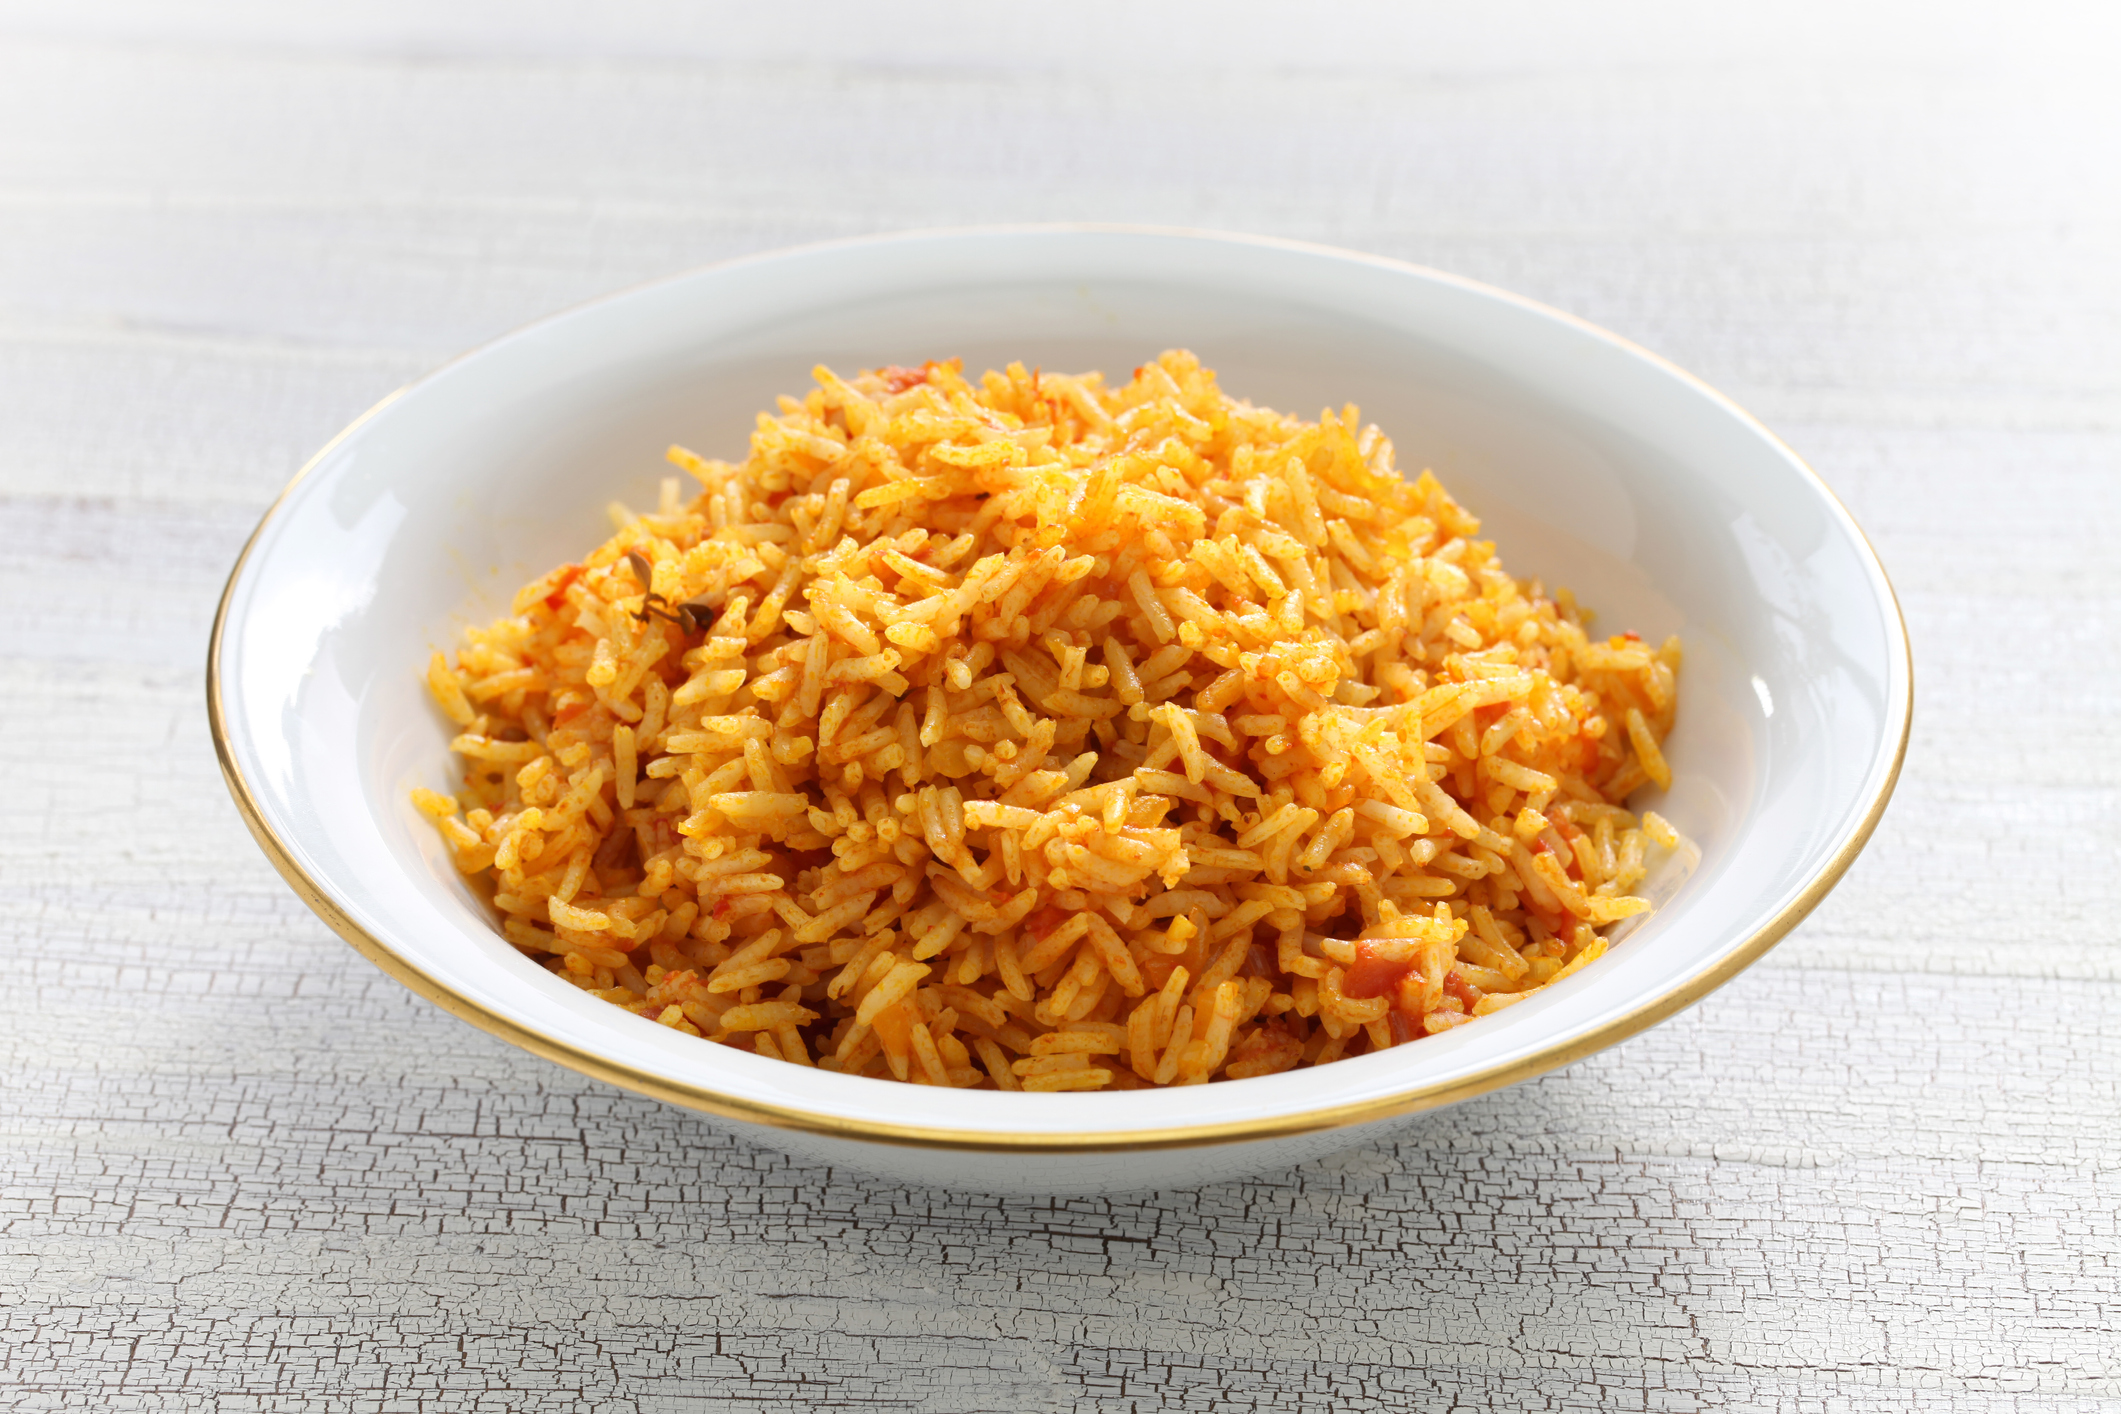 West African jollof rice